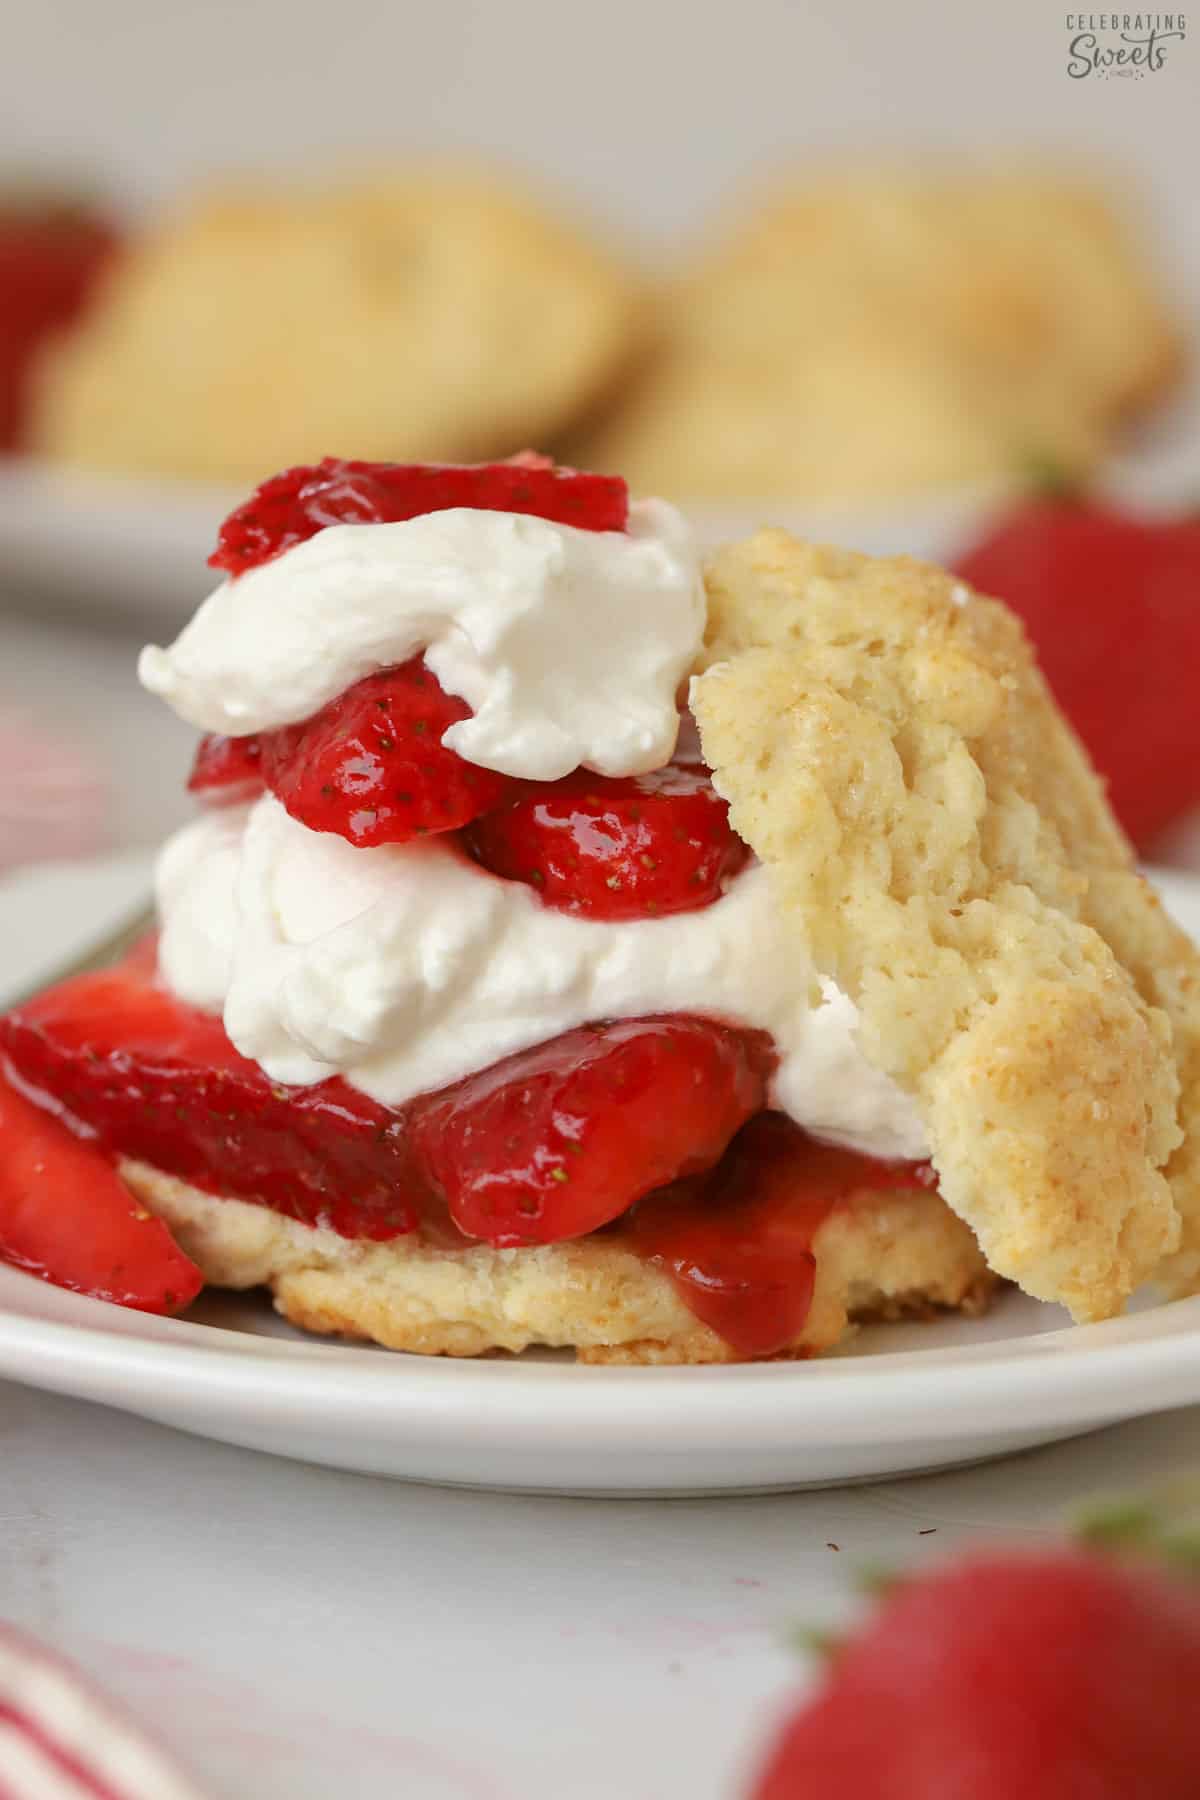 Layered strawberry shortcake on a white plate next to a fresh strawberry.